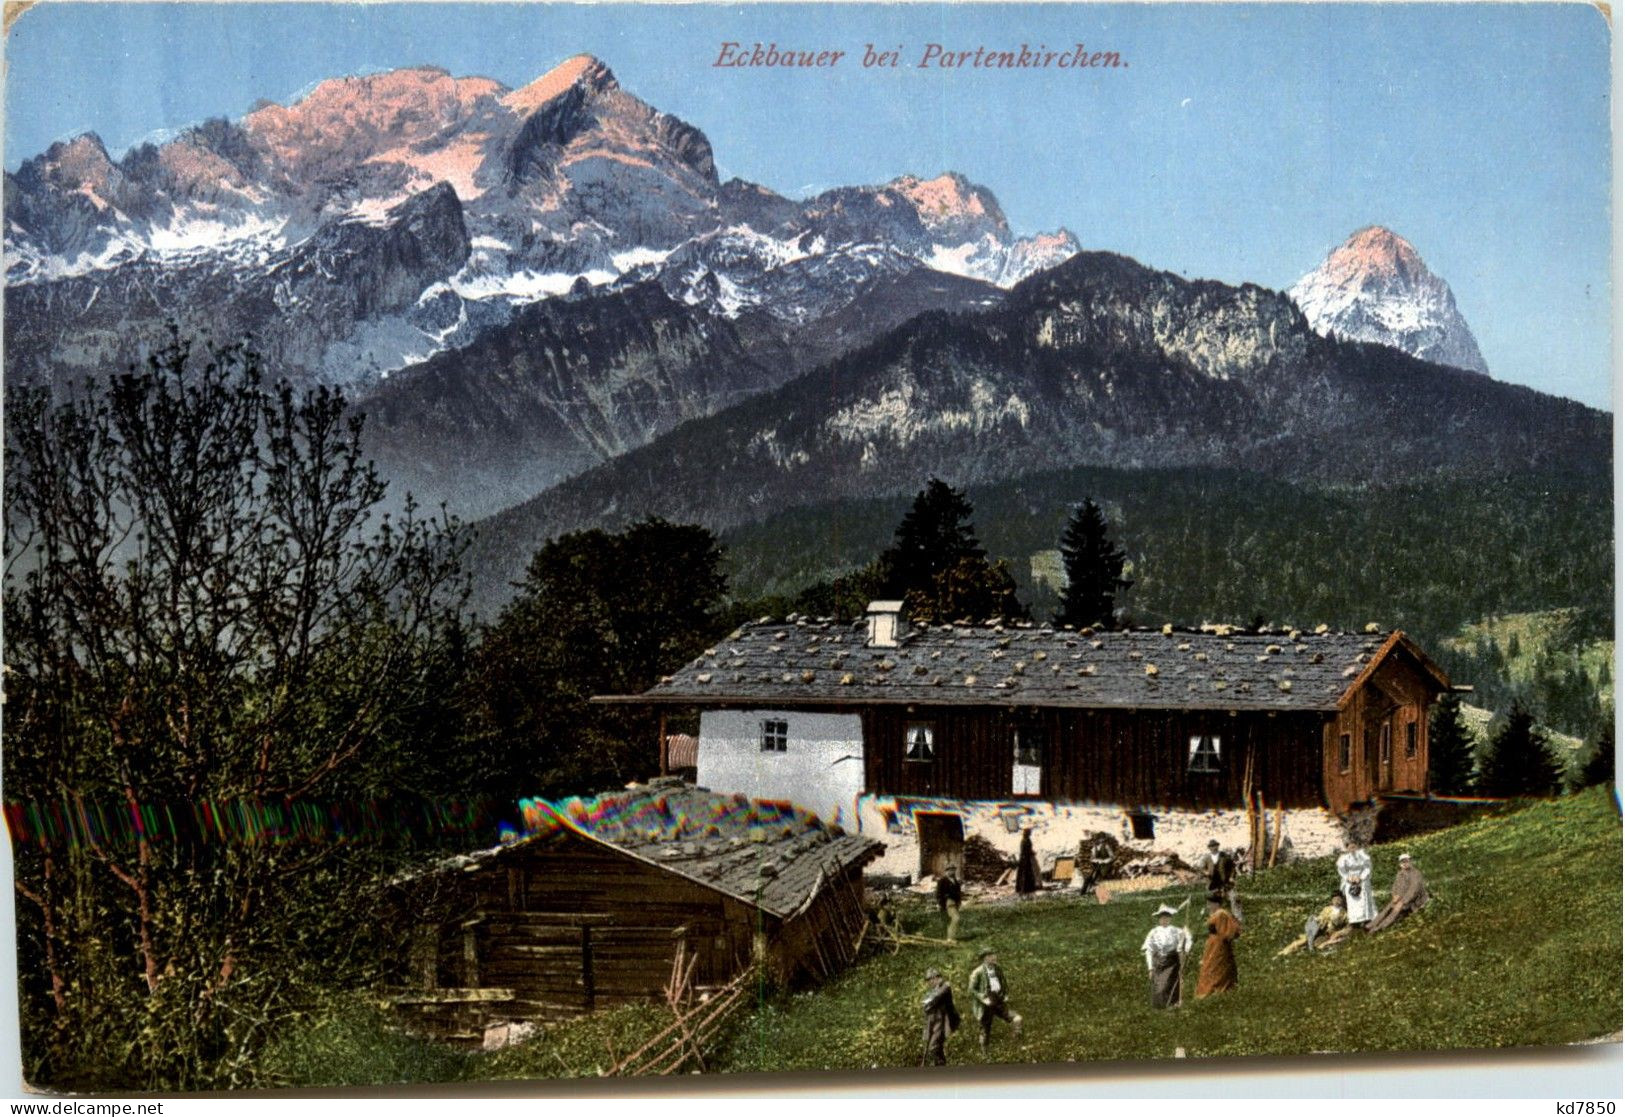 Eckbauer Bei Partenkirchen - Garmisch-Partenkirchen